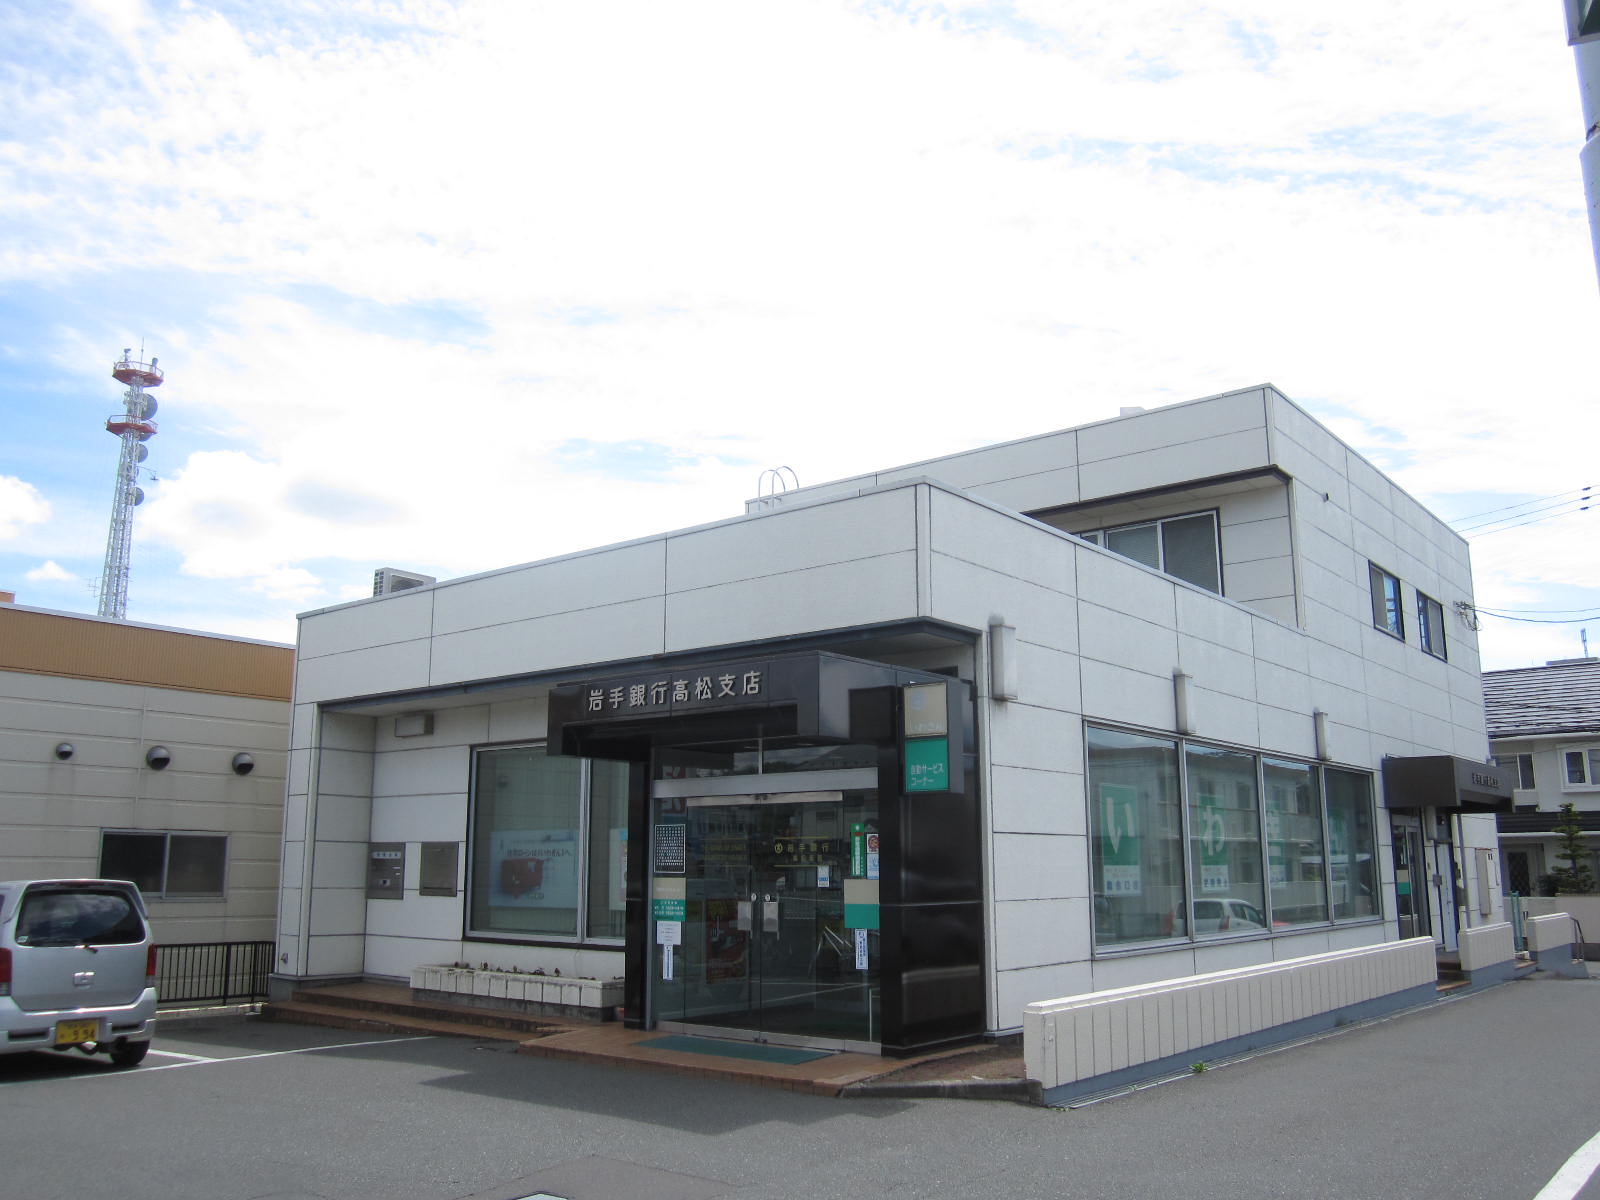 Bank. 538m to Iwate Takamatsu branch (Bank)